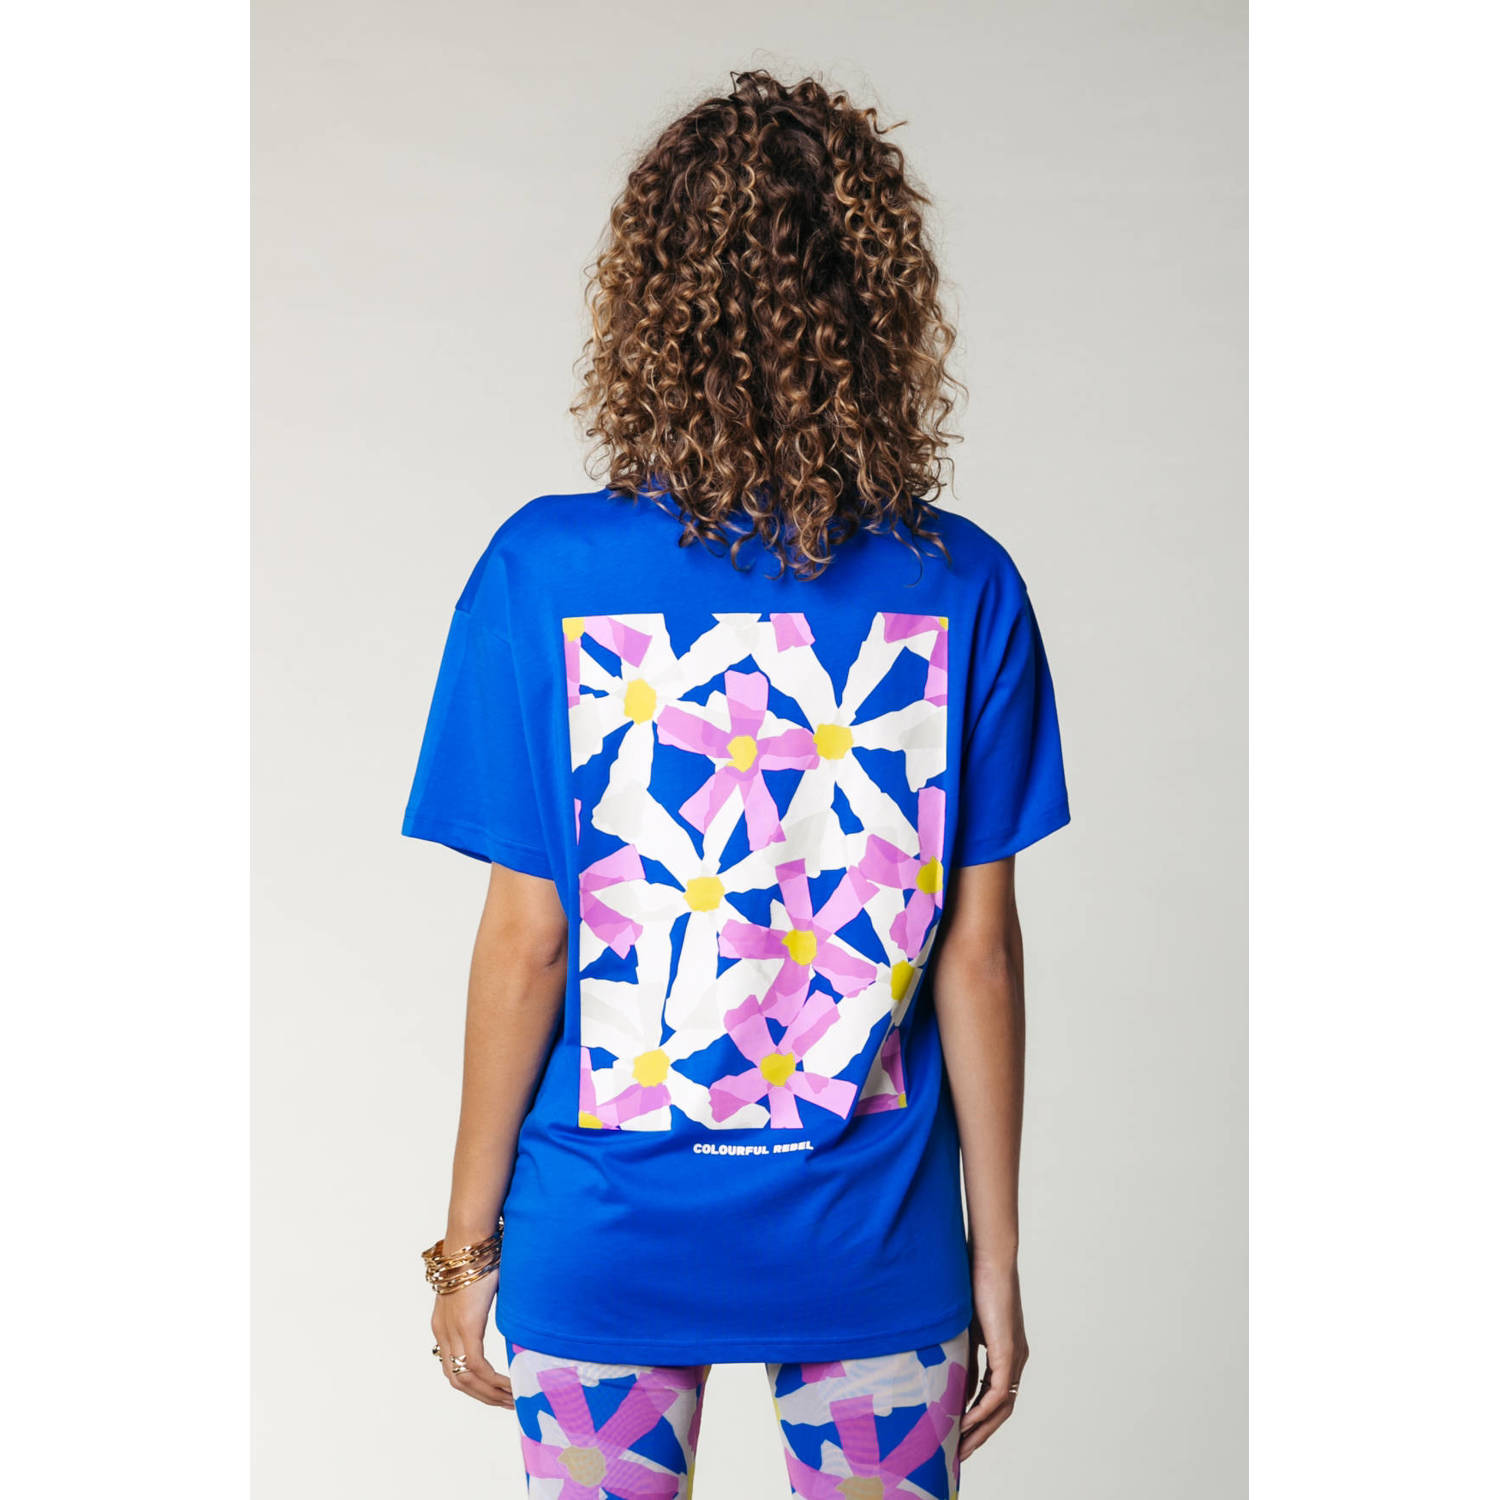 Colourful Rebel T-shirt Flowers Square met backprint blauw roze